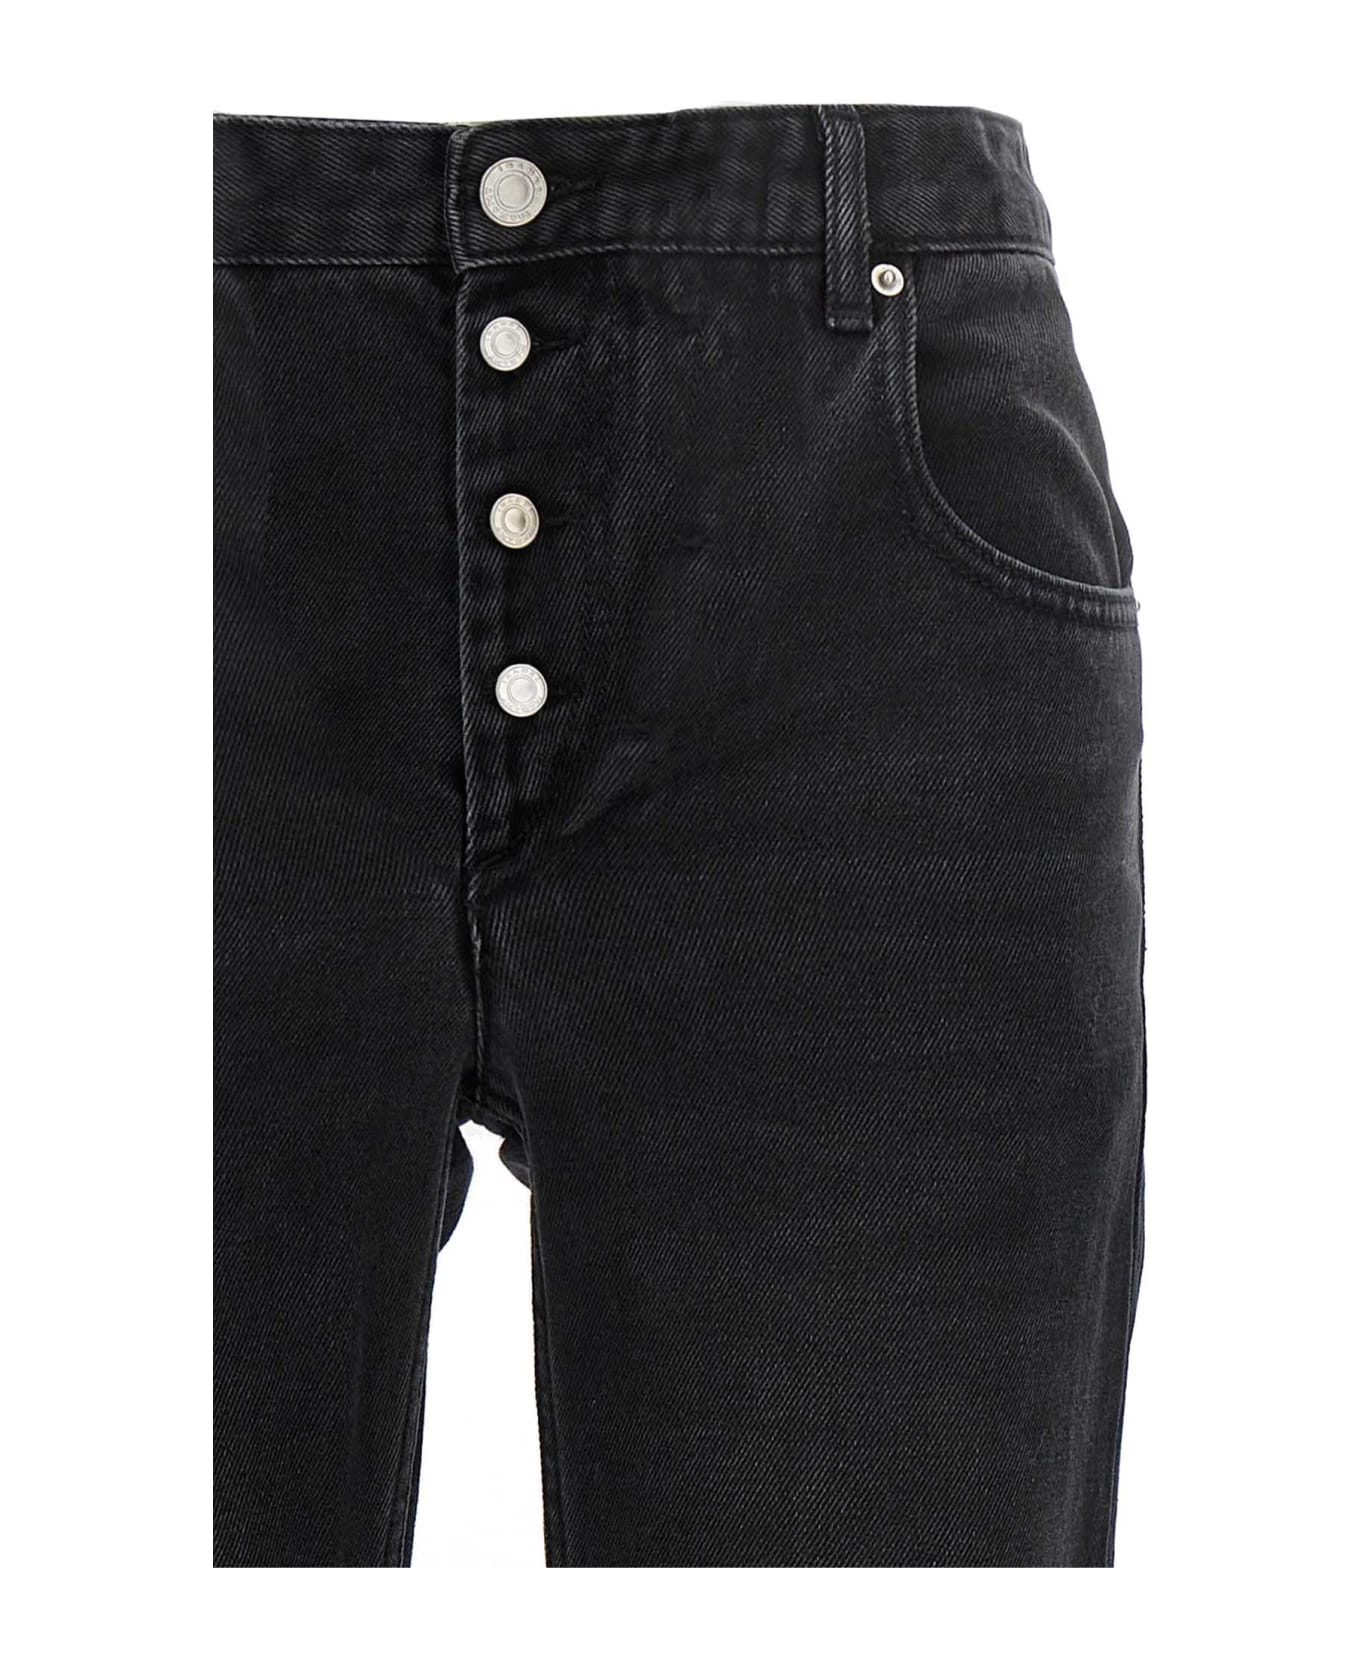 Isabel Marant Jemina High Waist Jeans - FADED BLACK